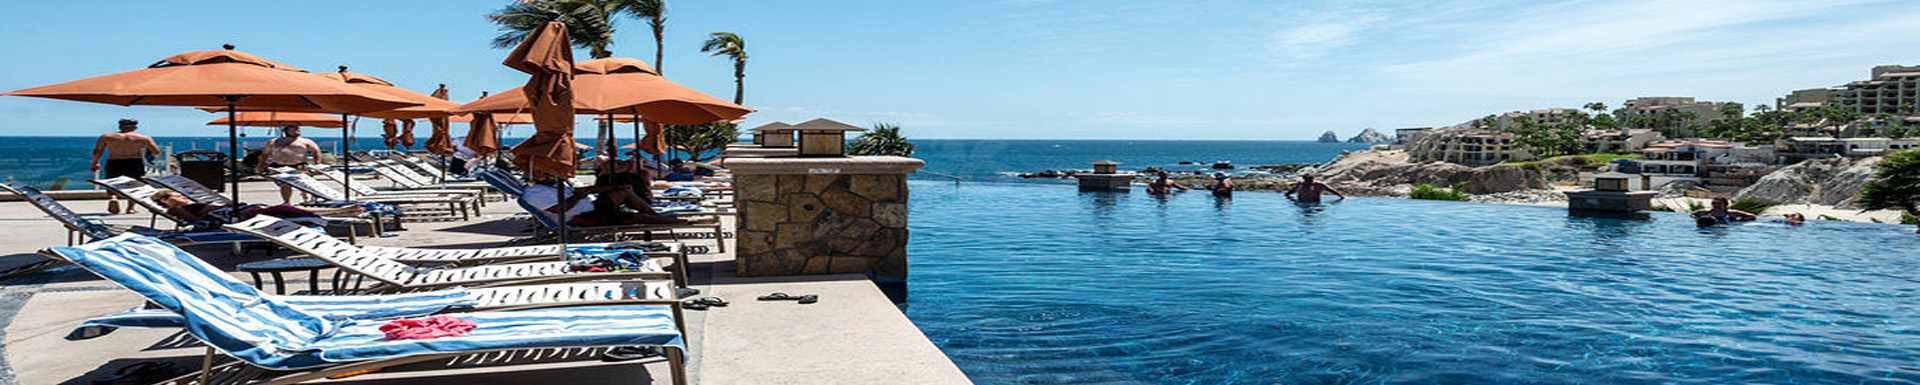 Sirena del Mar by Welk Resorts